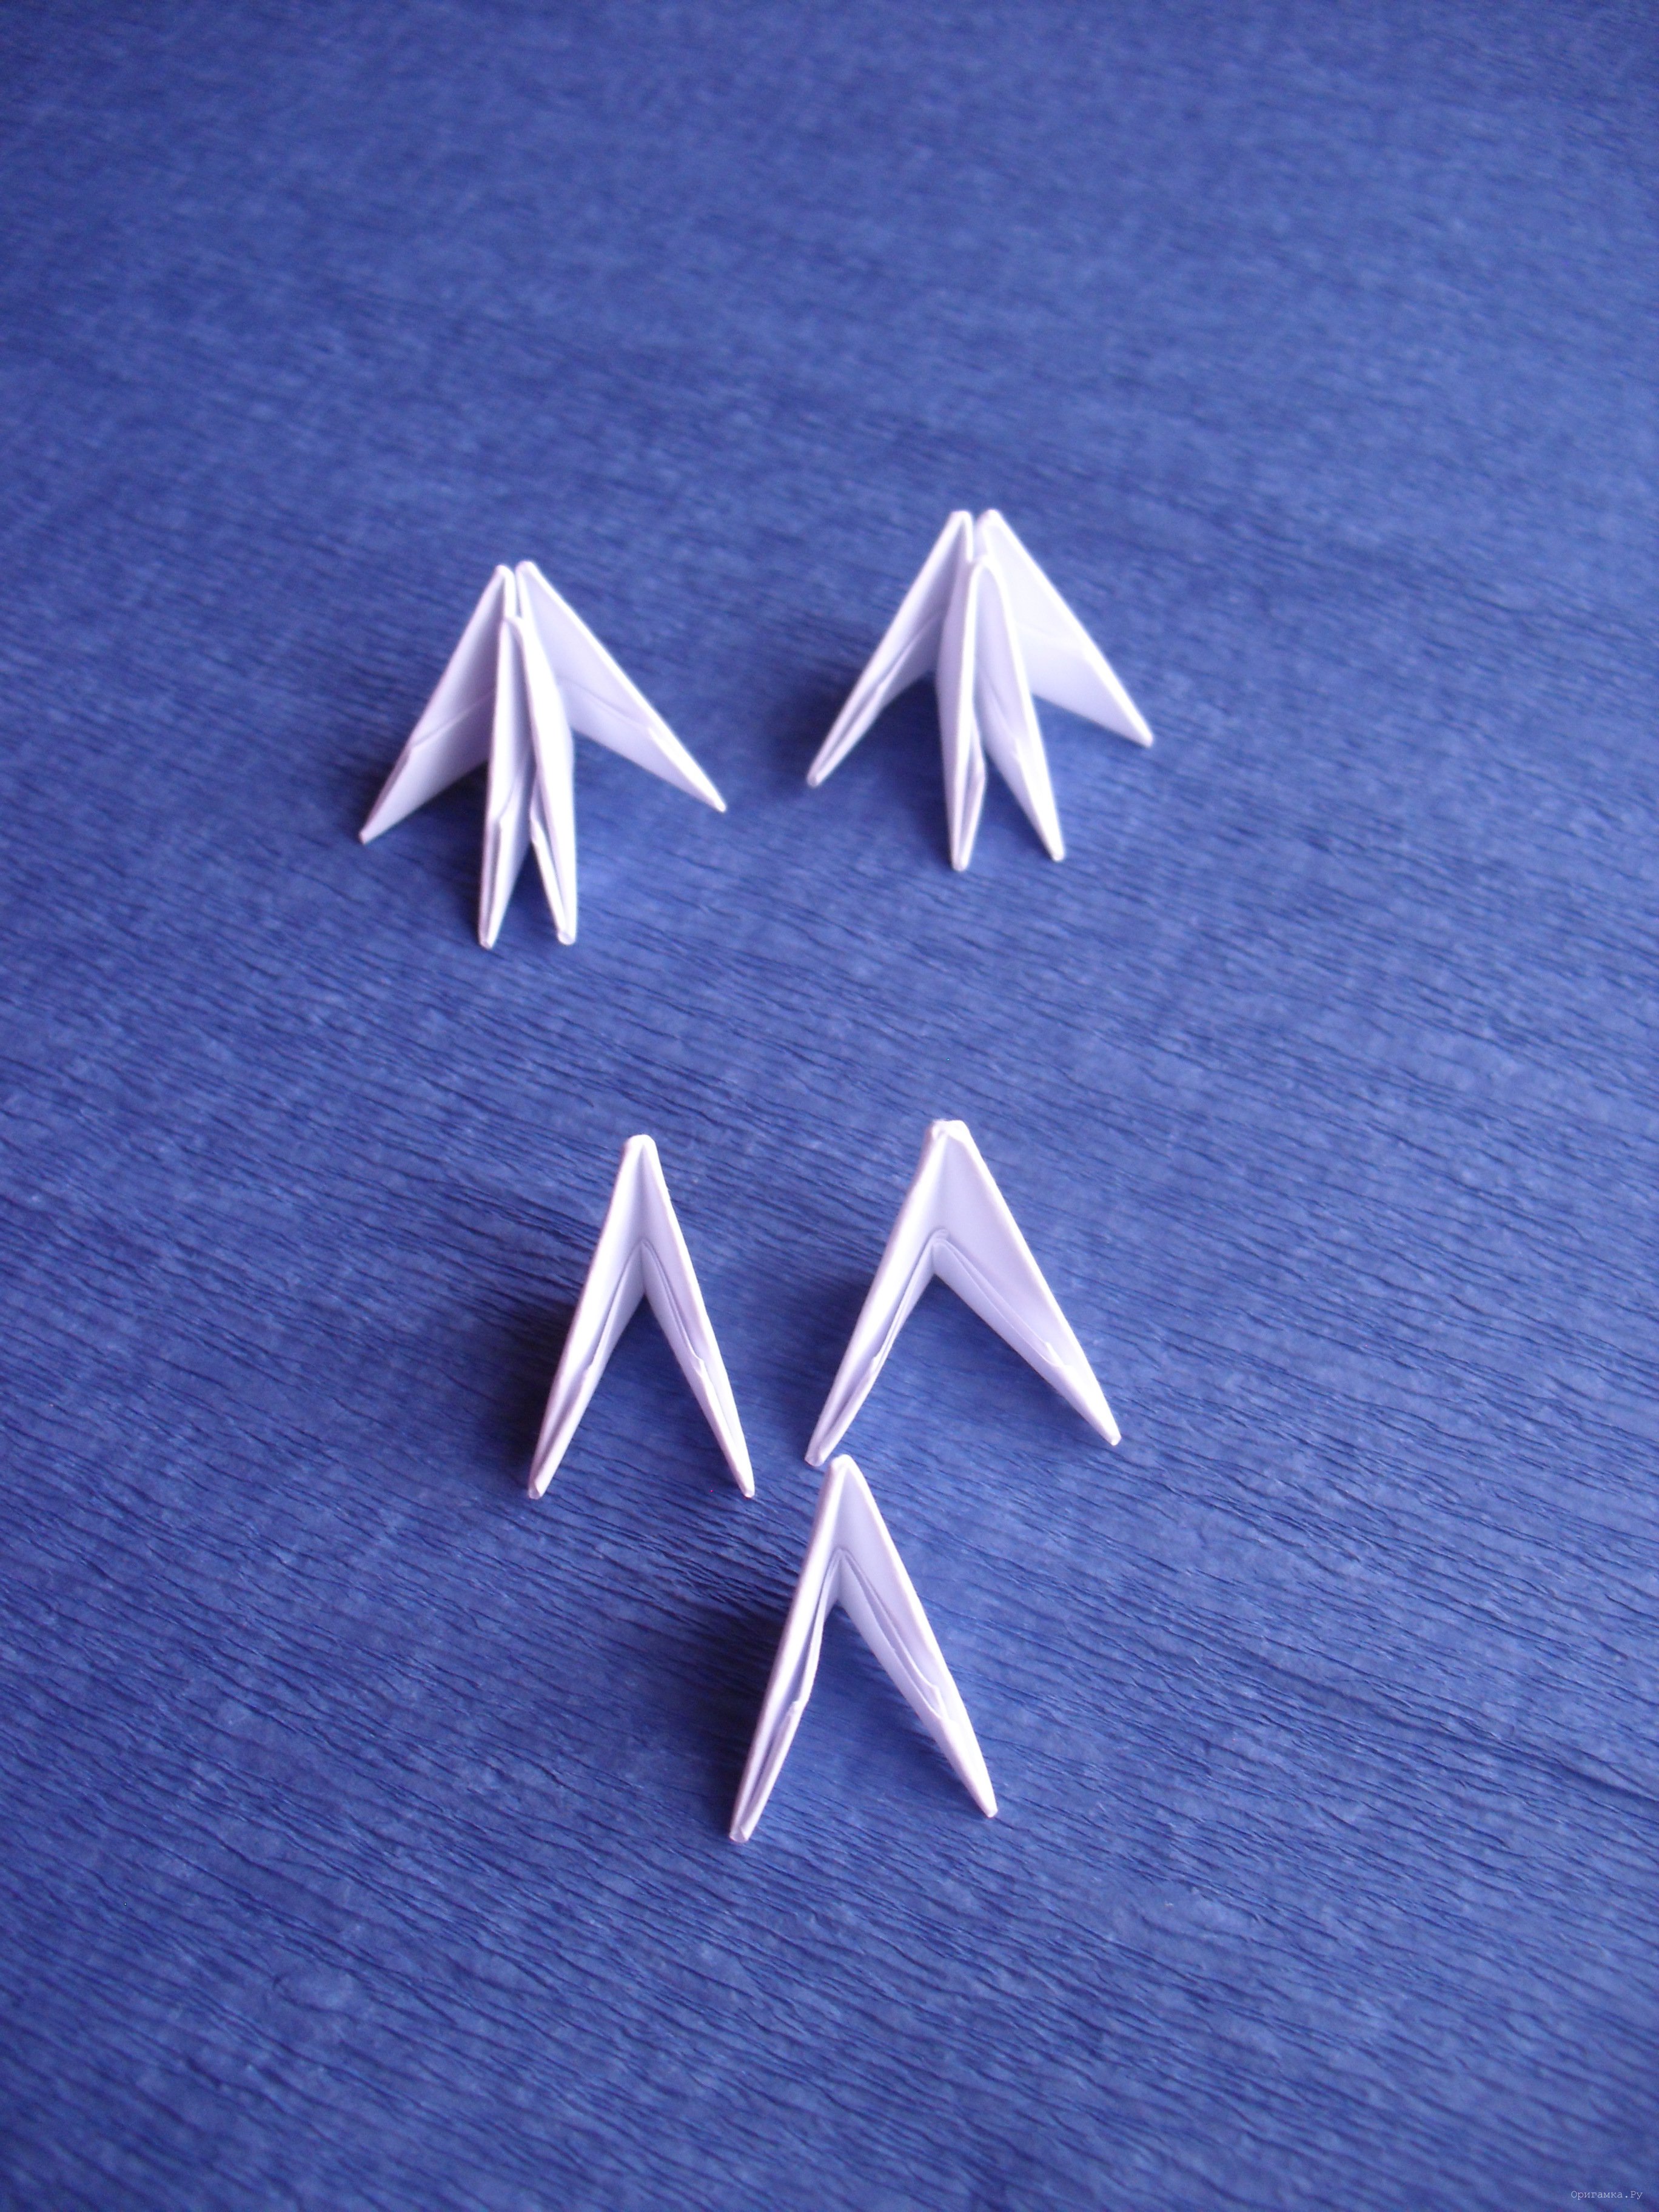 Origami - Оригами - техника складывания фигур из бумаги,